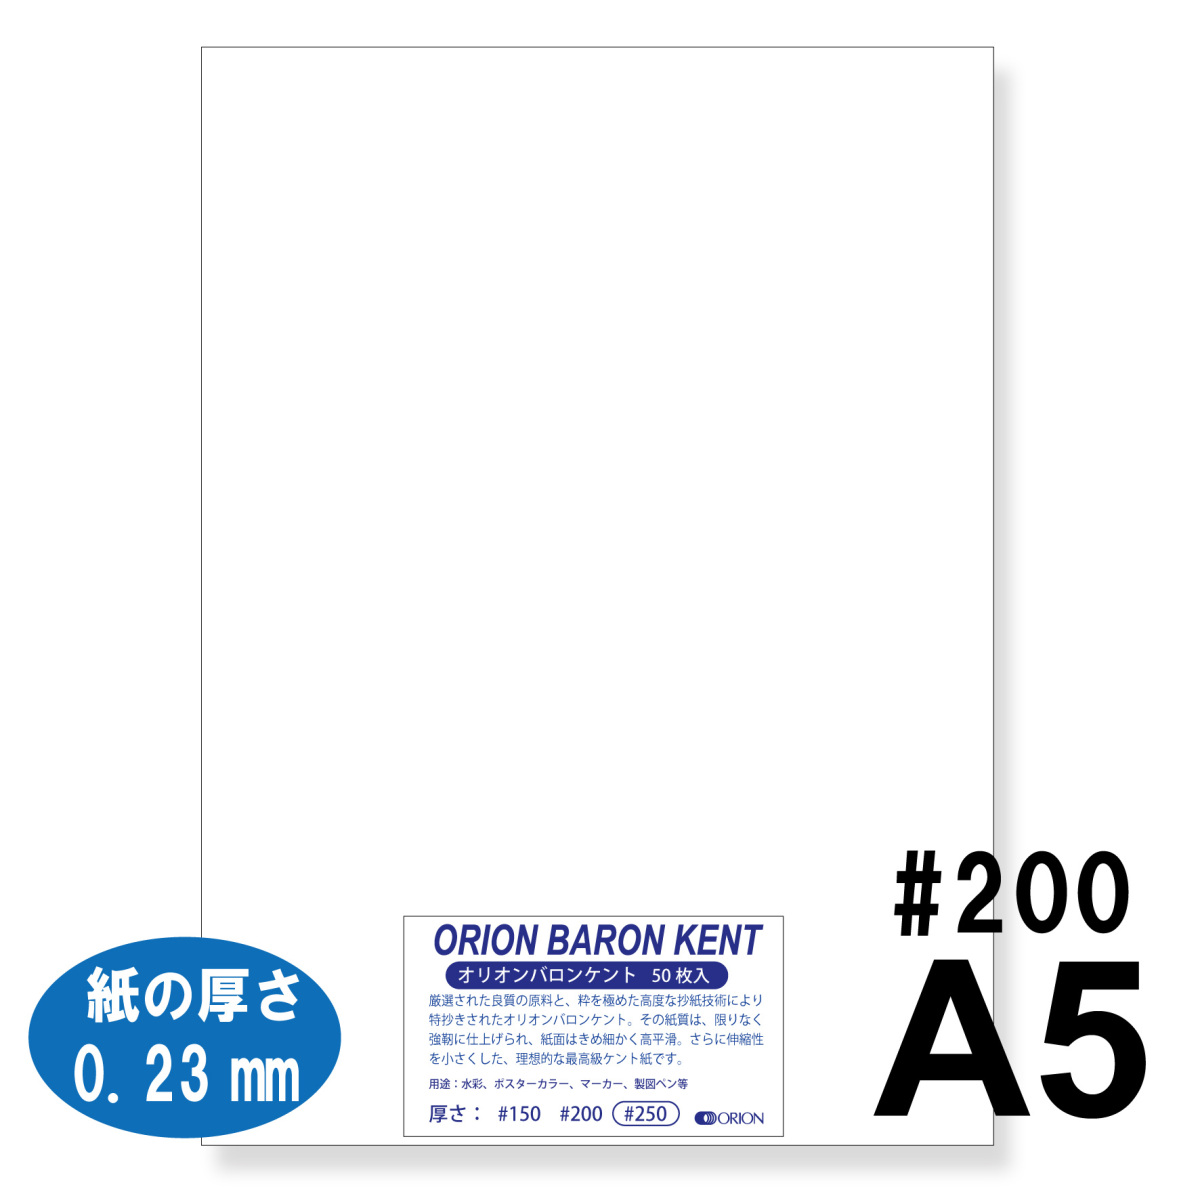  кент бумага Orion ba long кент бумага #200 &lt;175kg&gt; 50 листов входит A5 размер 